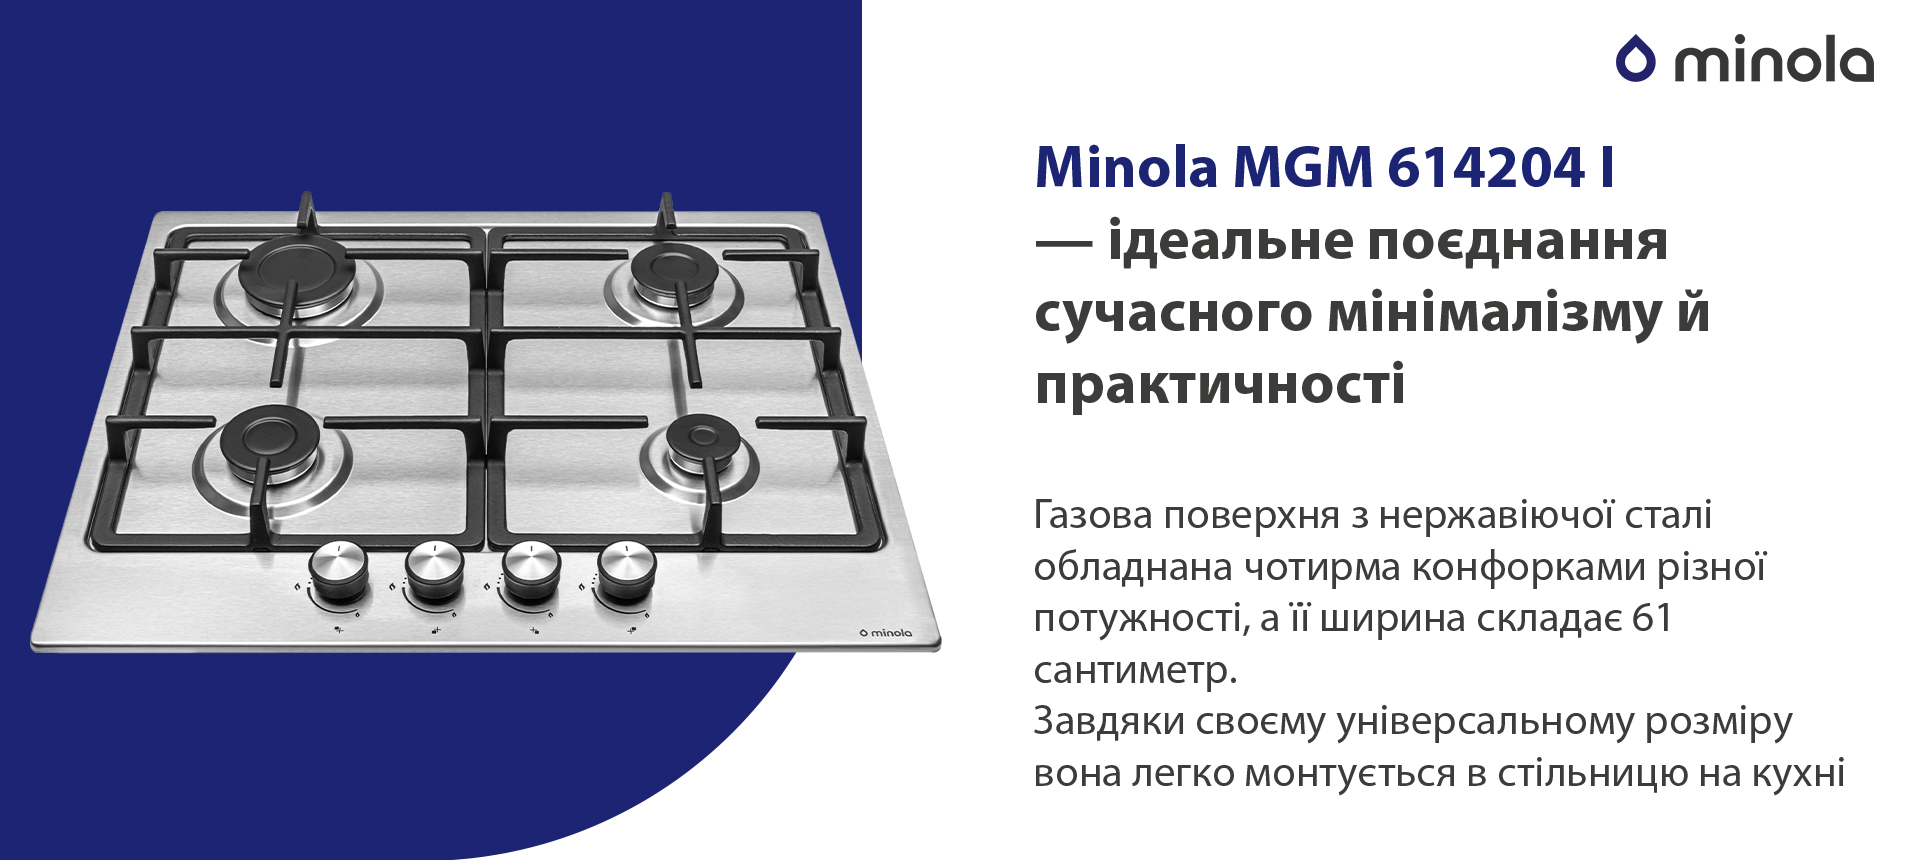 Minola MGM 614204 I в магазине в Киеве - фото 10